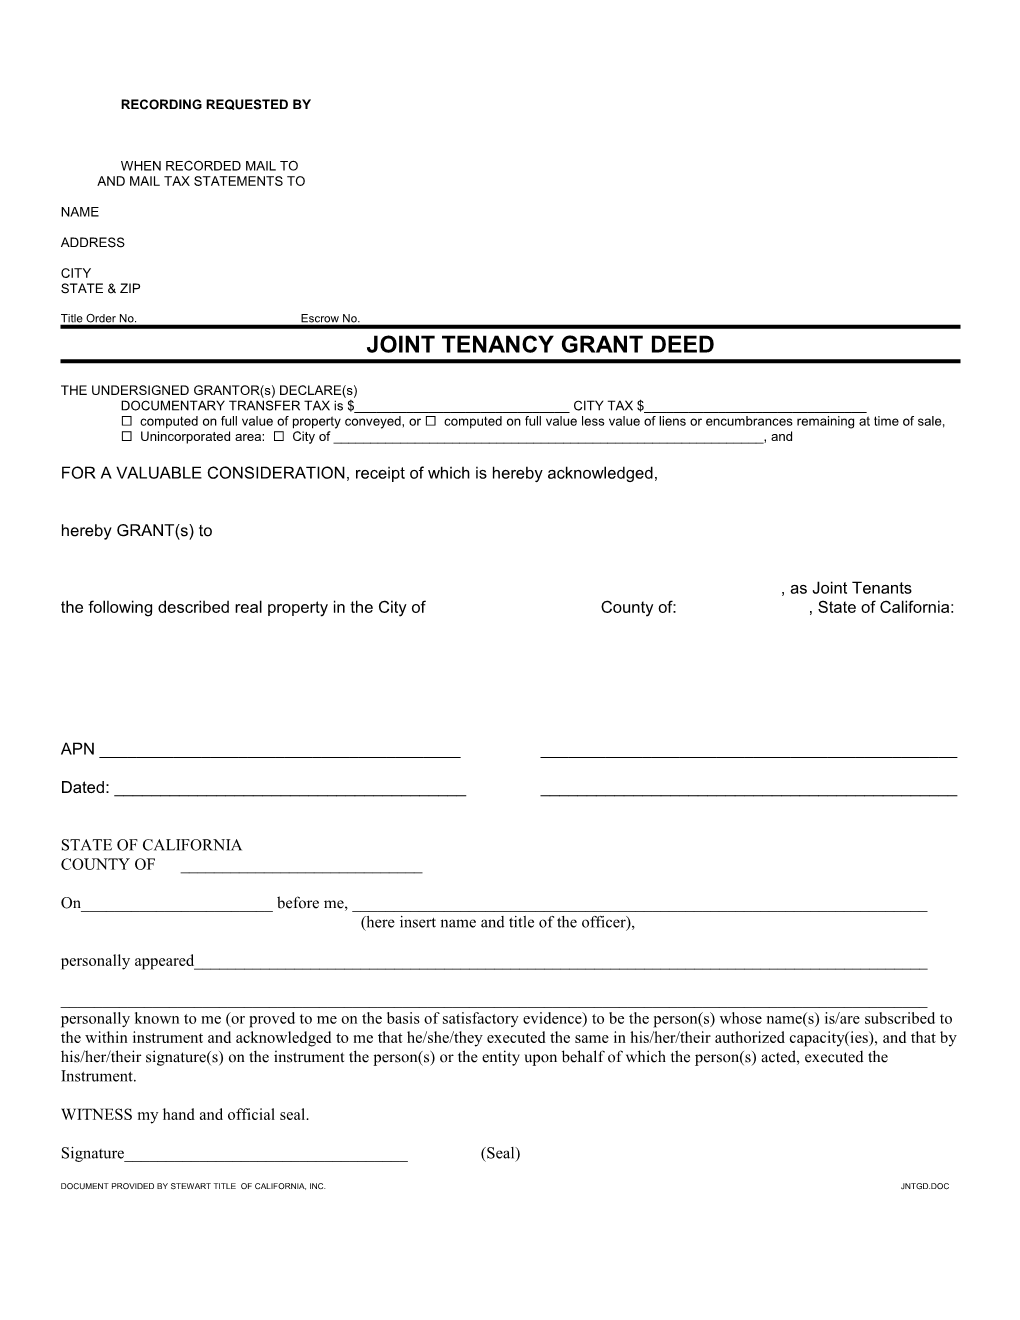 Joint Tenancy Grant Deed